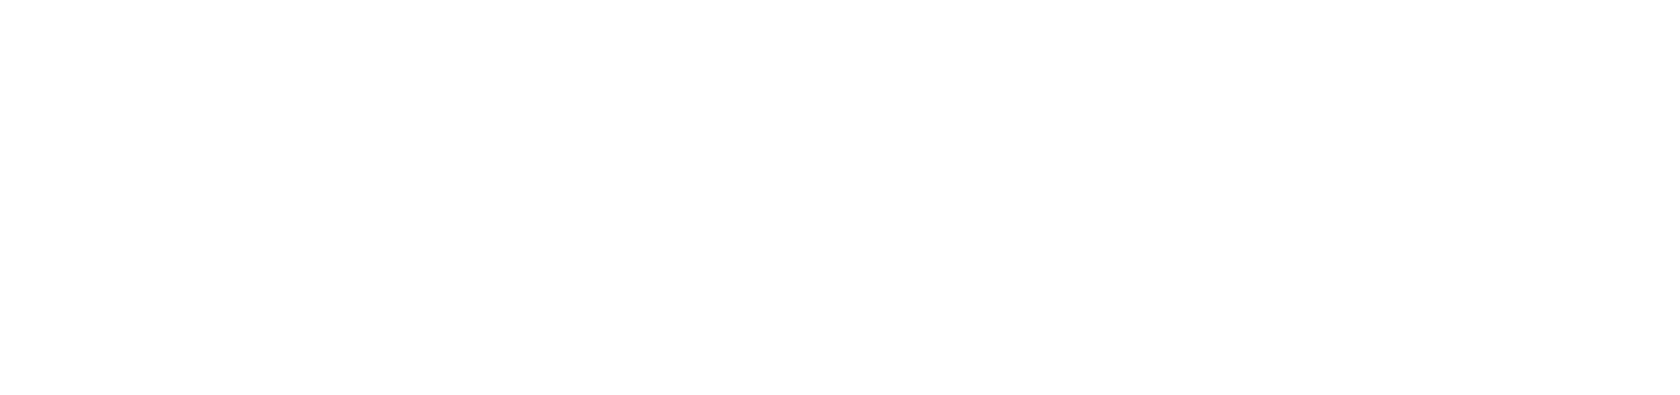 directors education program logo